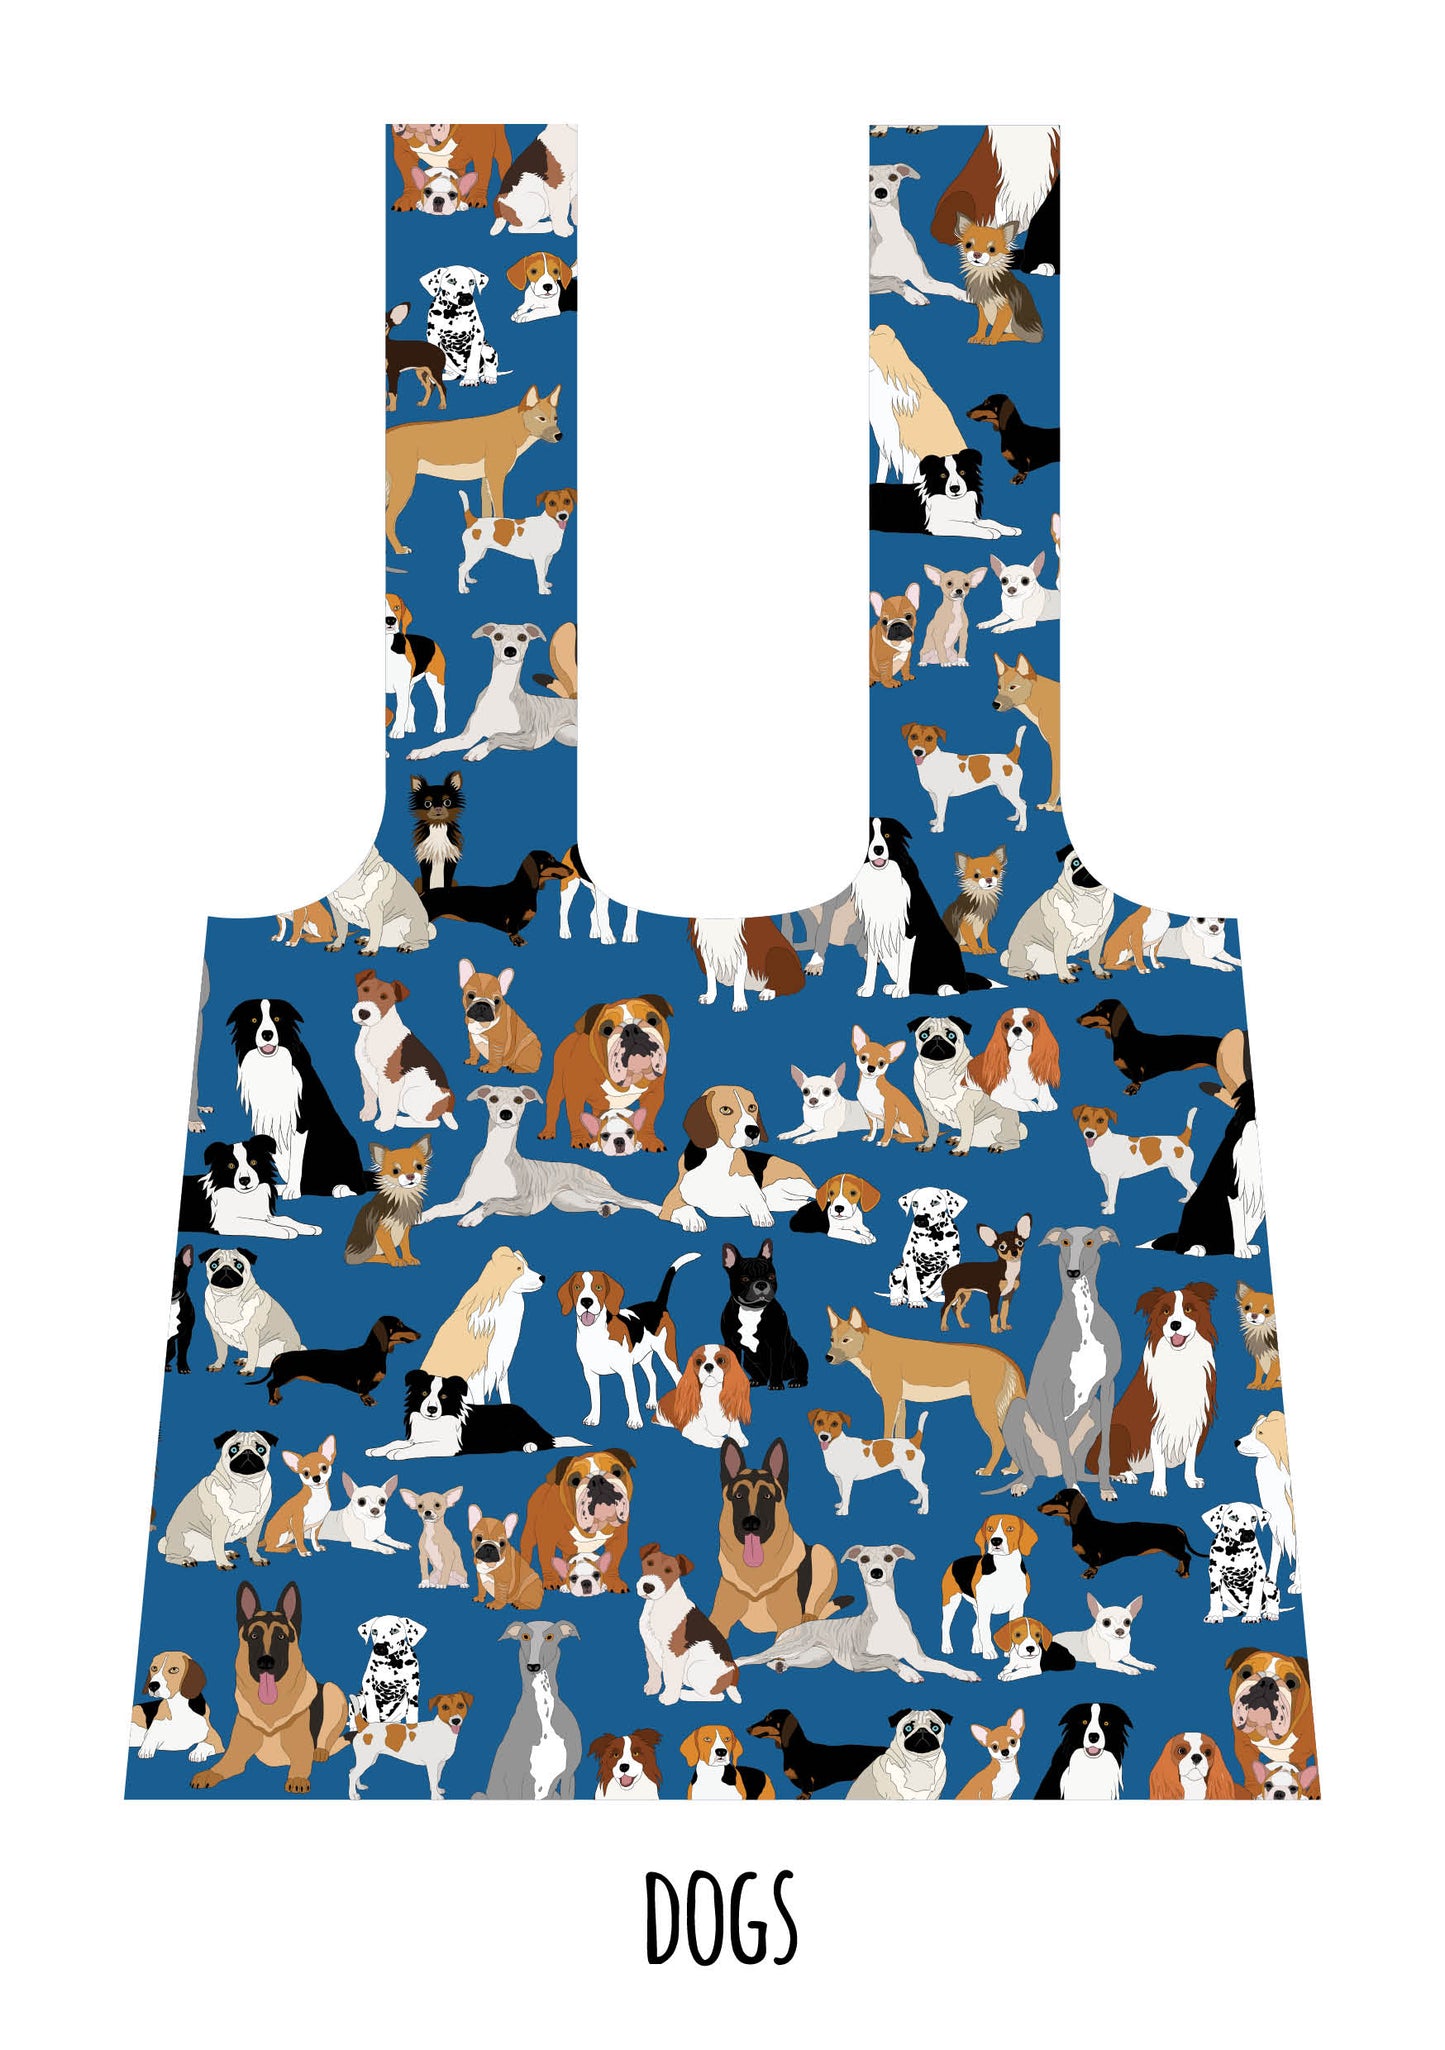 Dogs RPET shopping bag